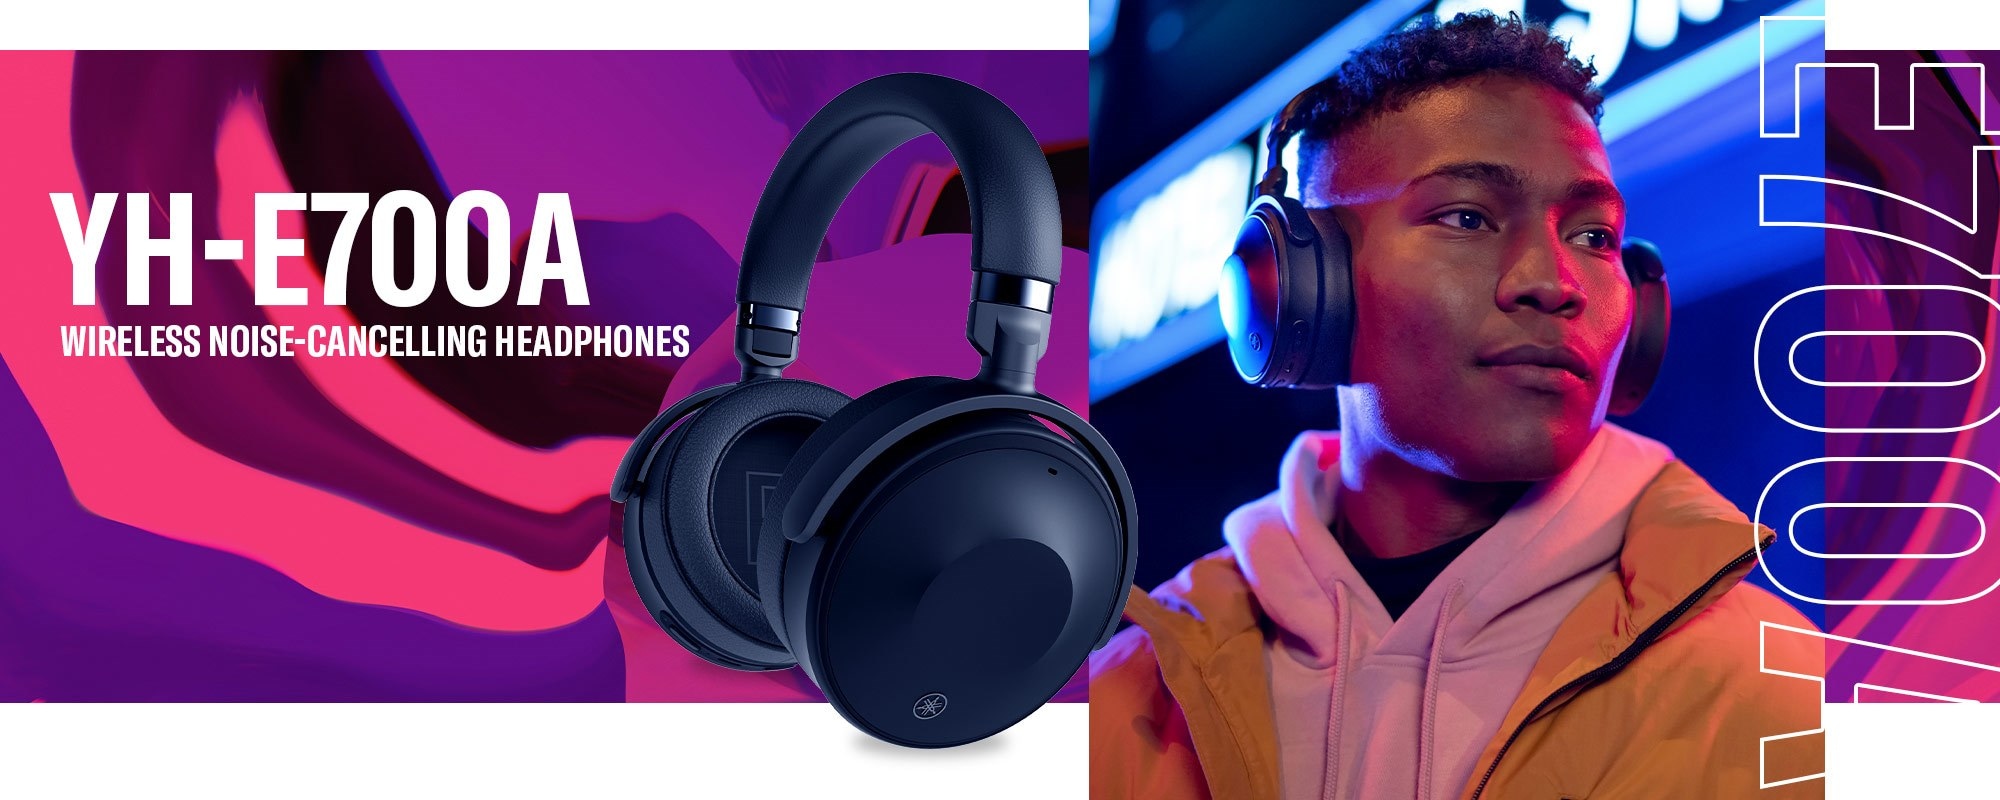 Headphones Cancelling YH-E700A Noise – Wireless Yamaha